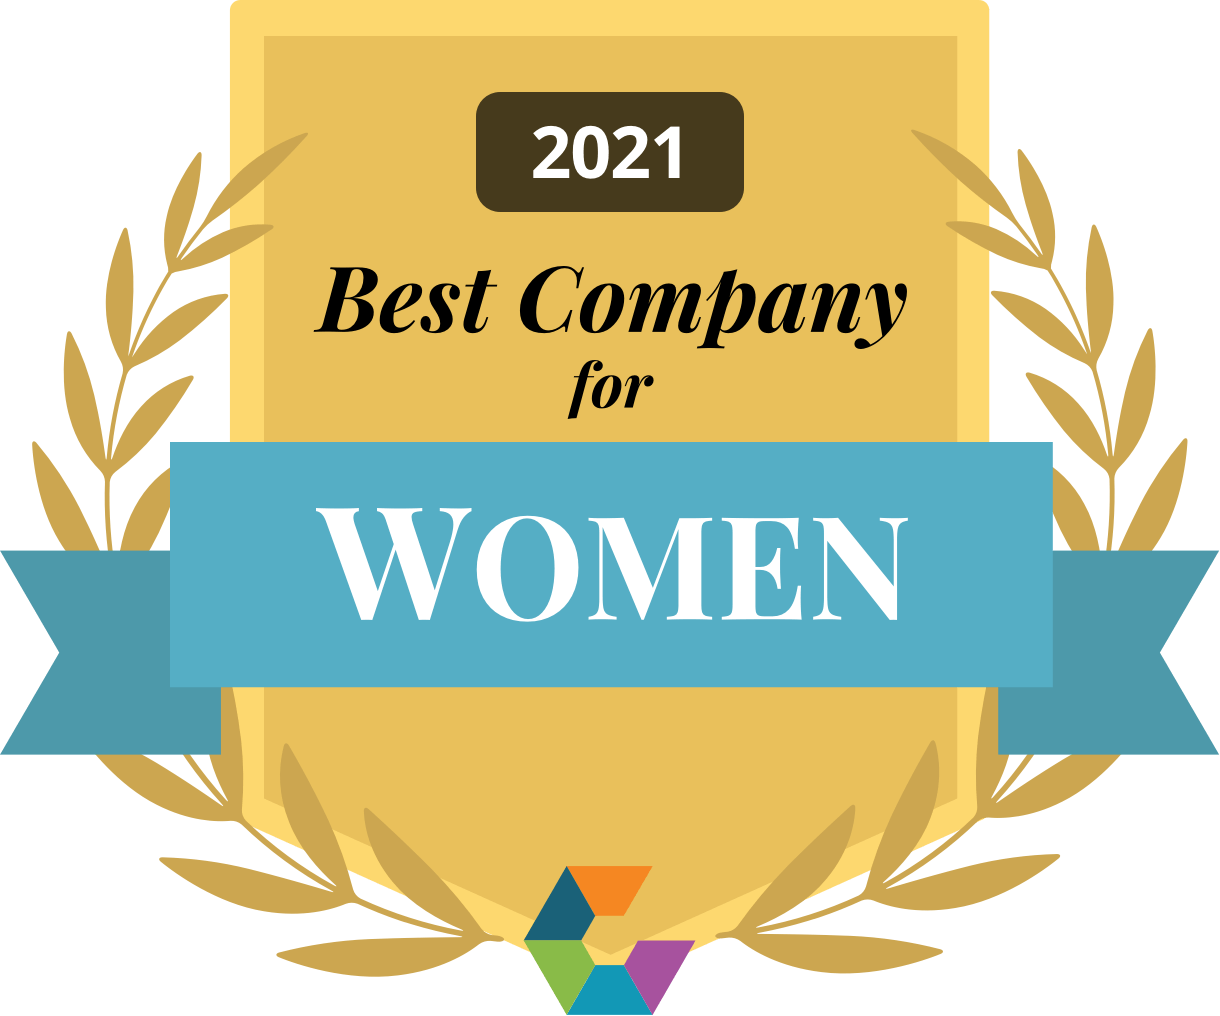 Best company for women 2021 award